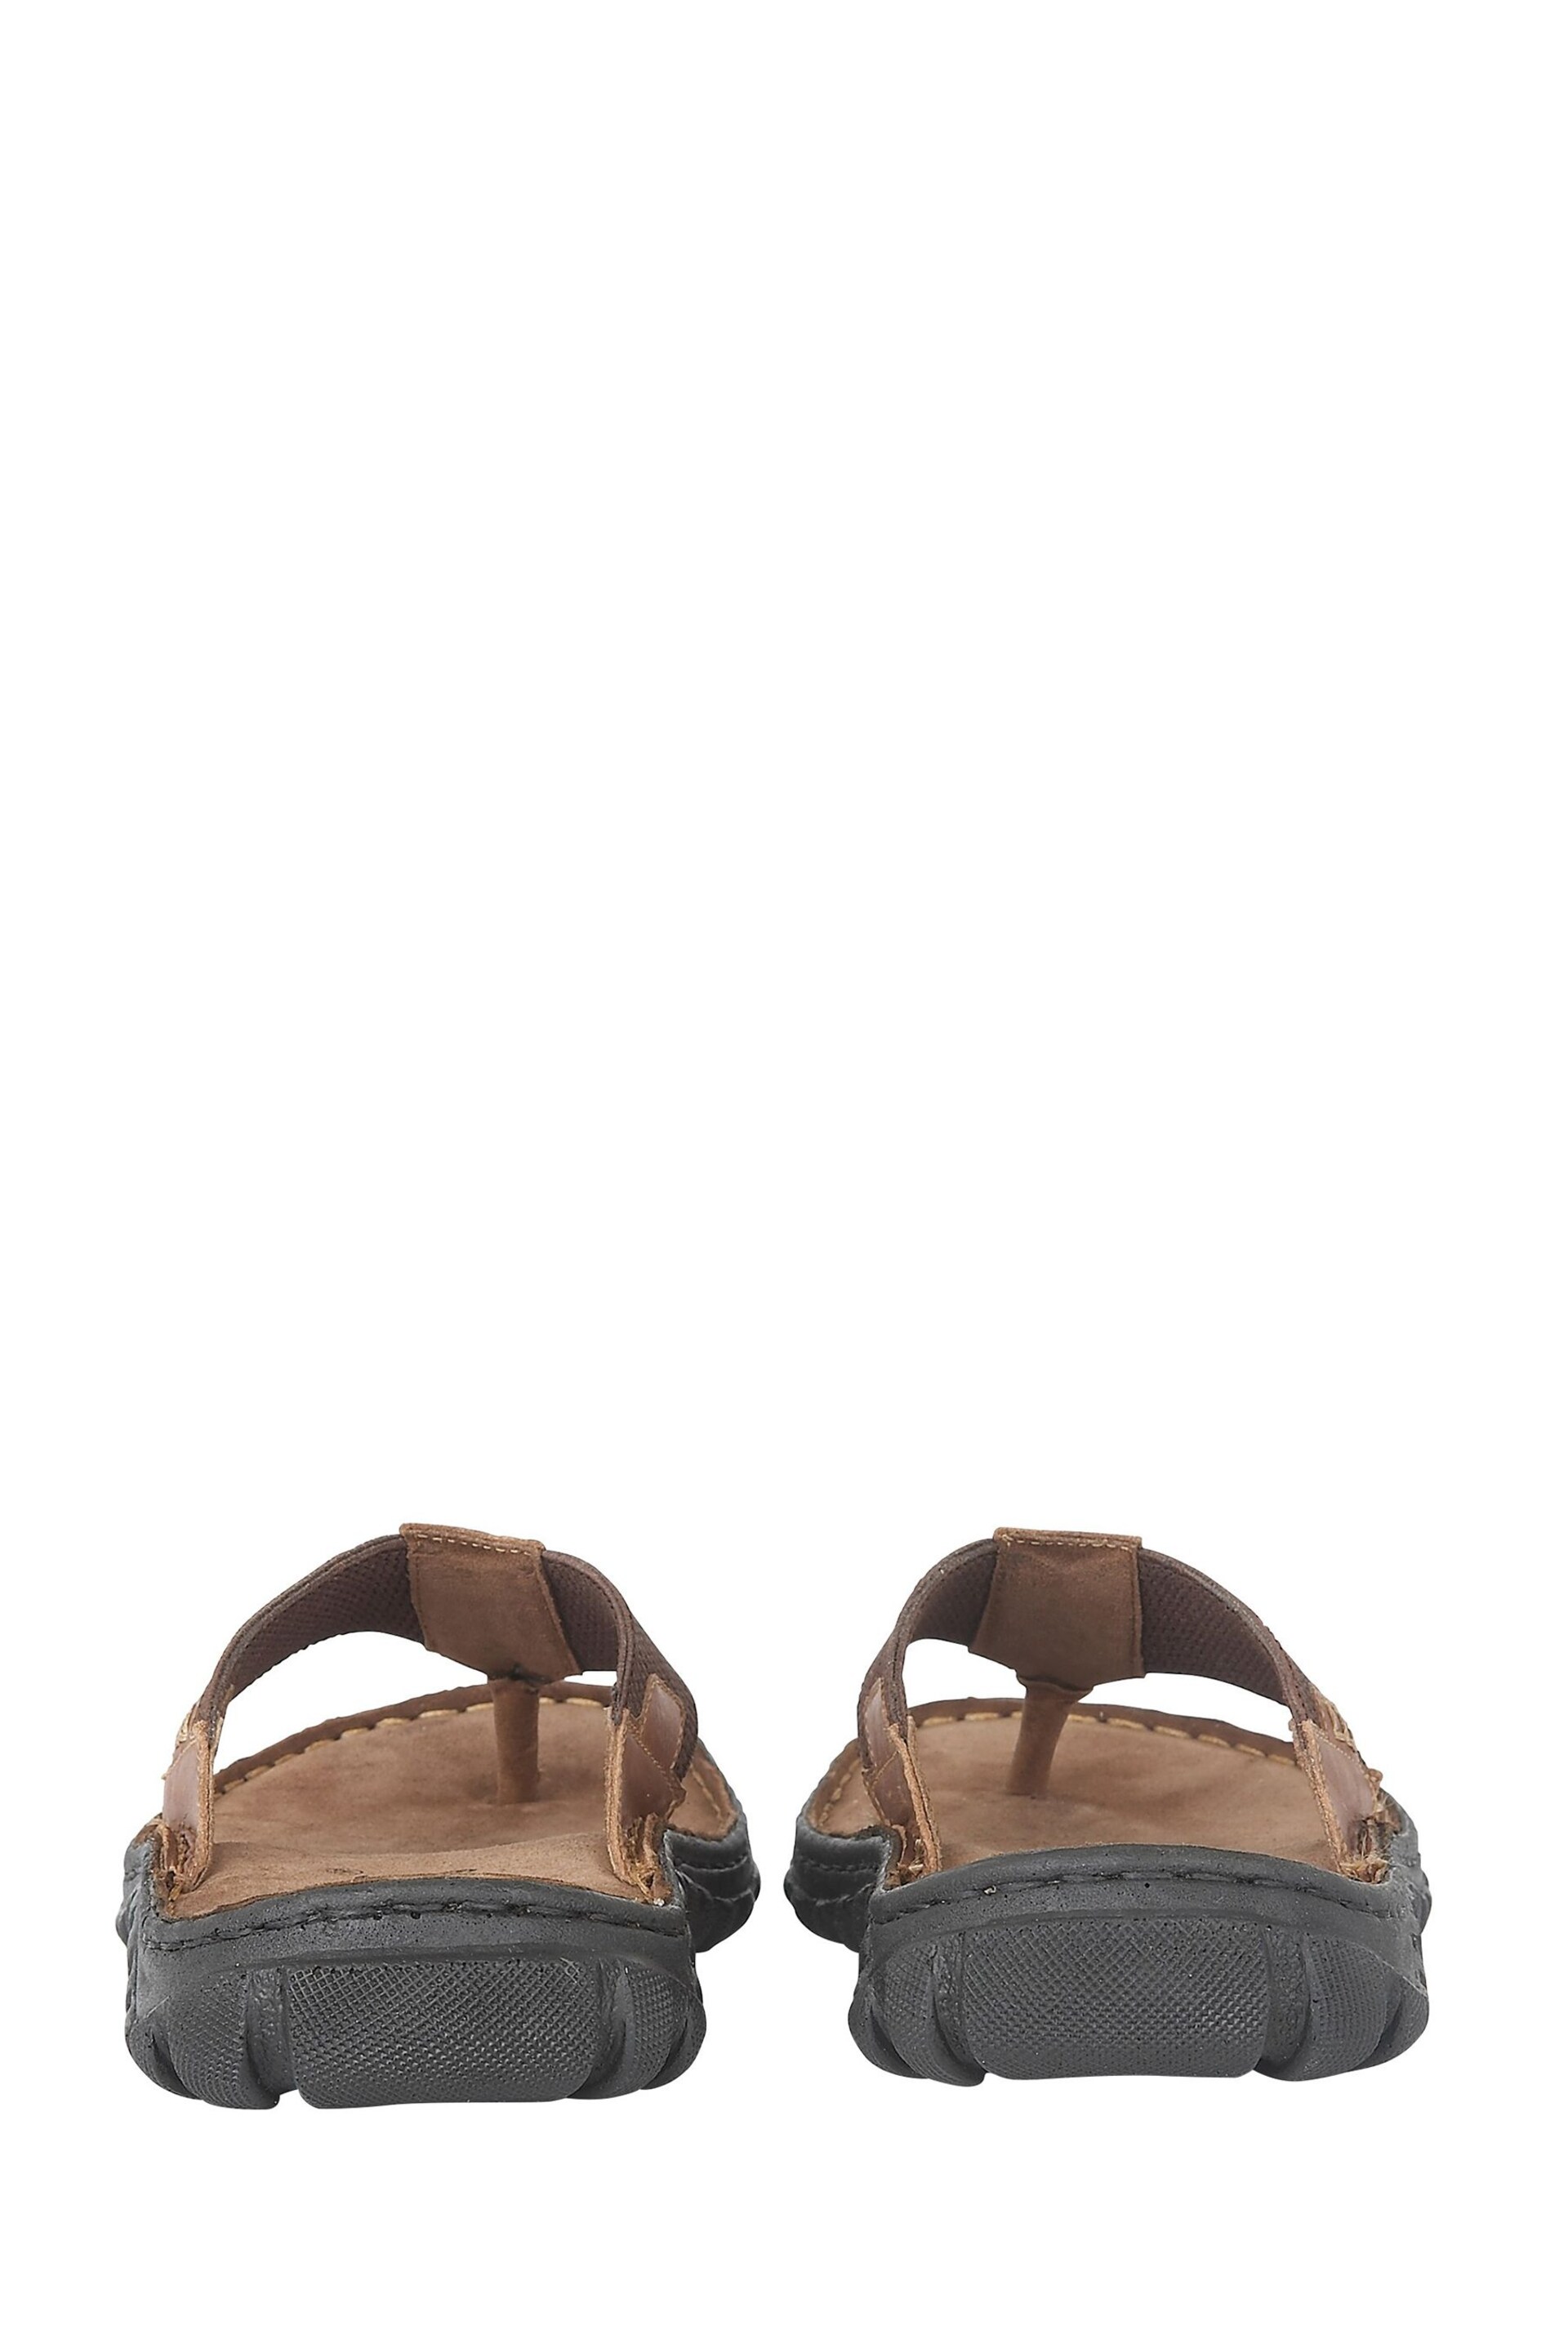 Lotus Brown Casual Toe Post Sandals - Image 3 of 4